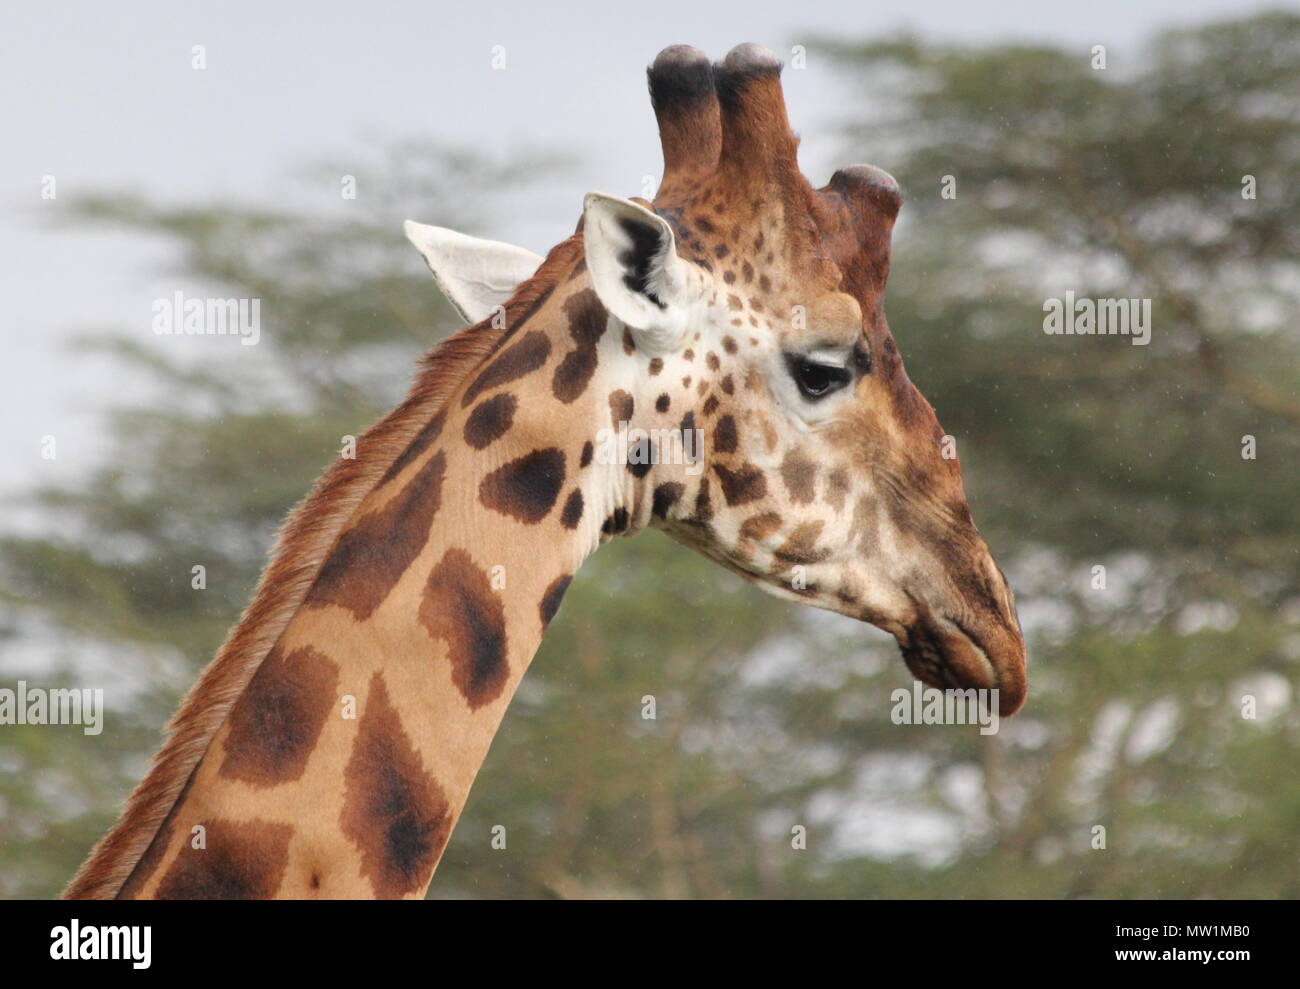 Head of the giraffe against green tree background Stock Photo